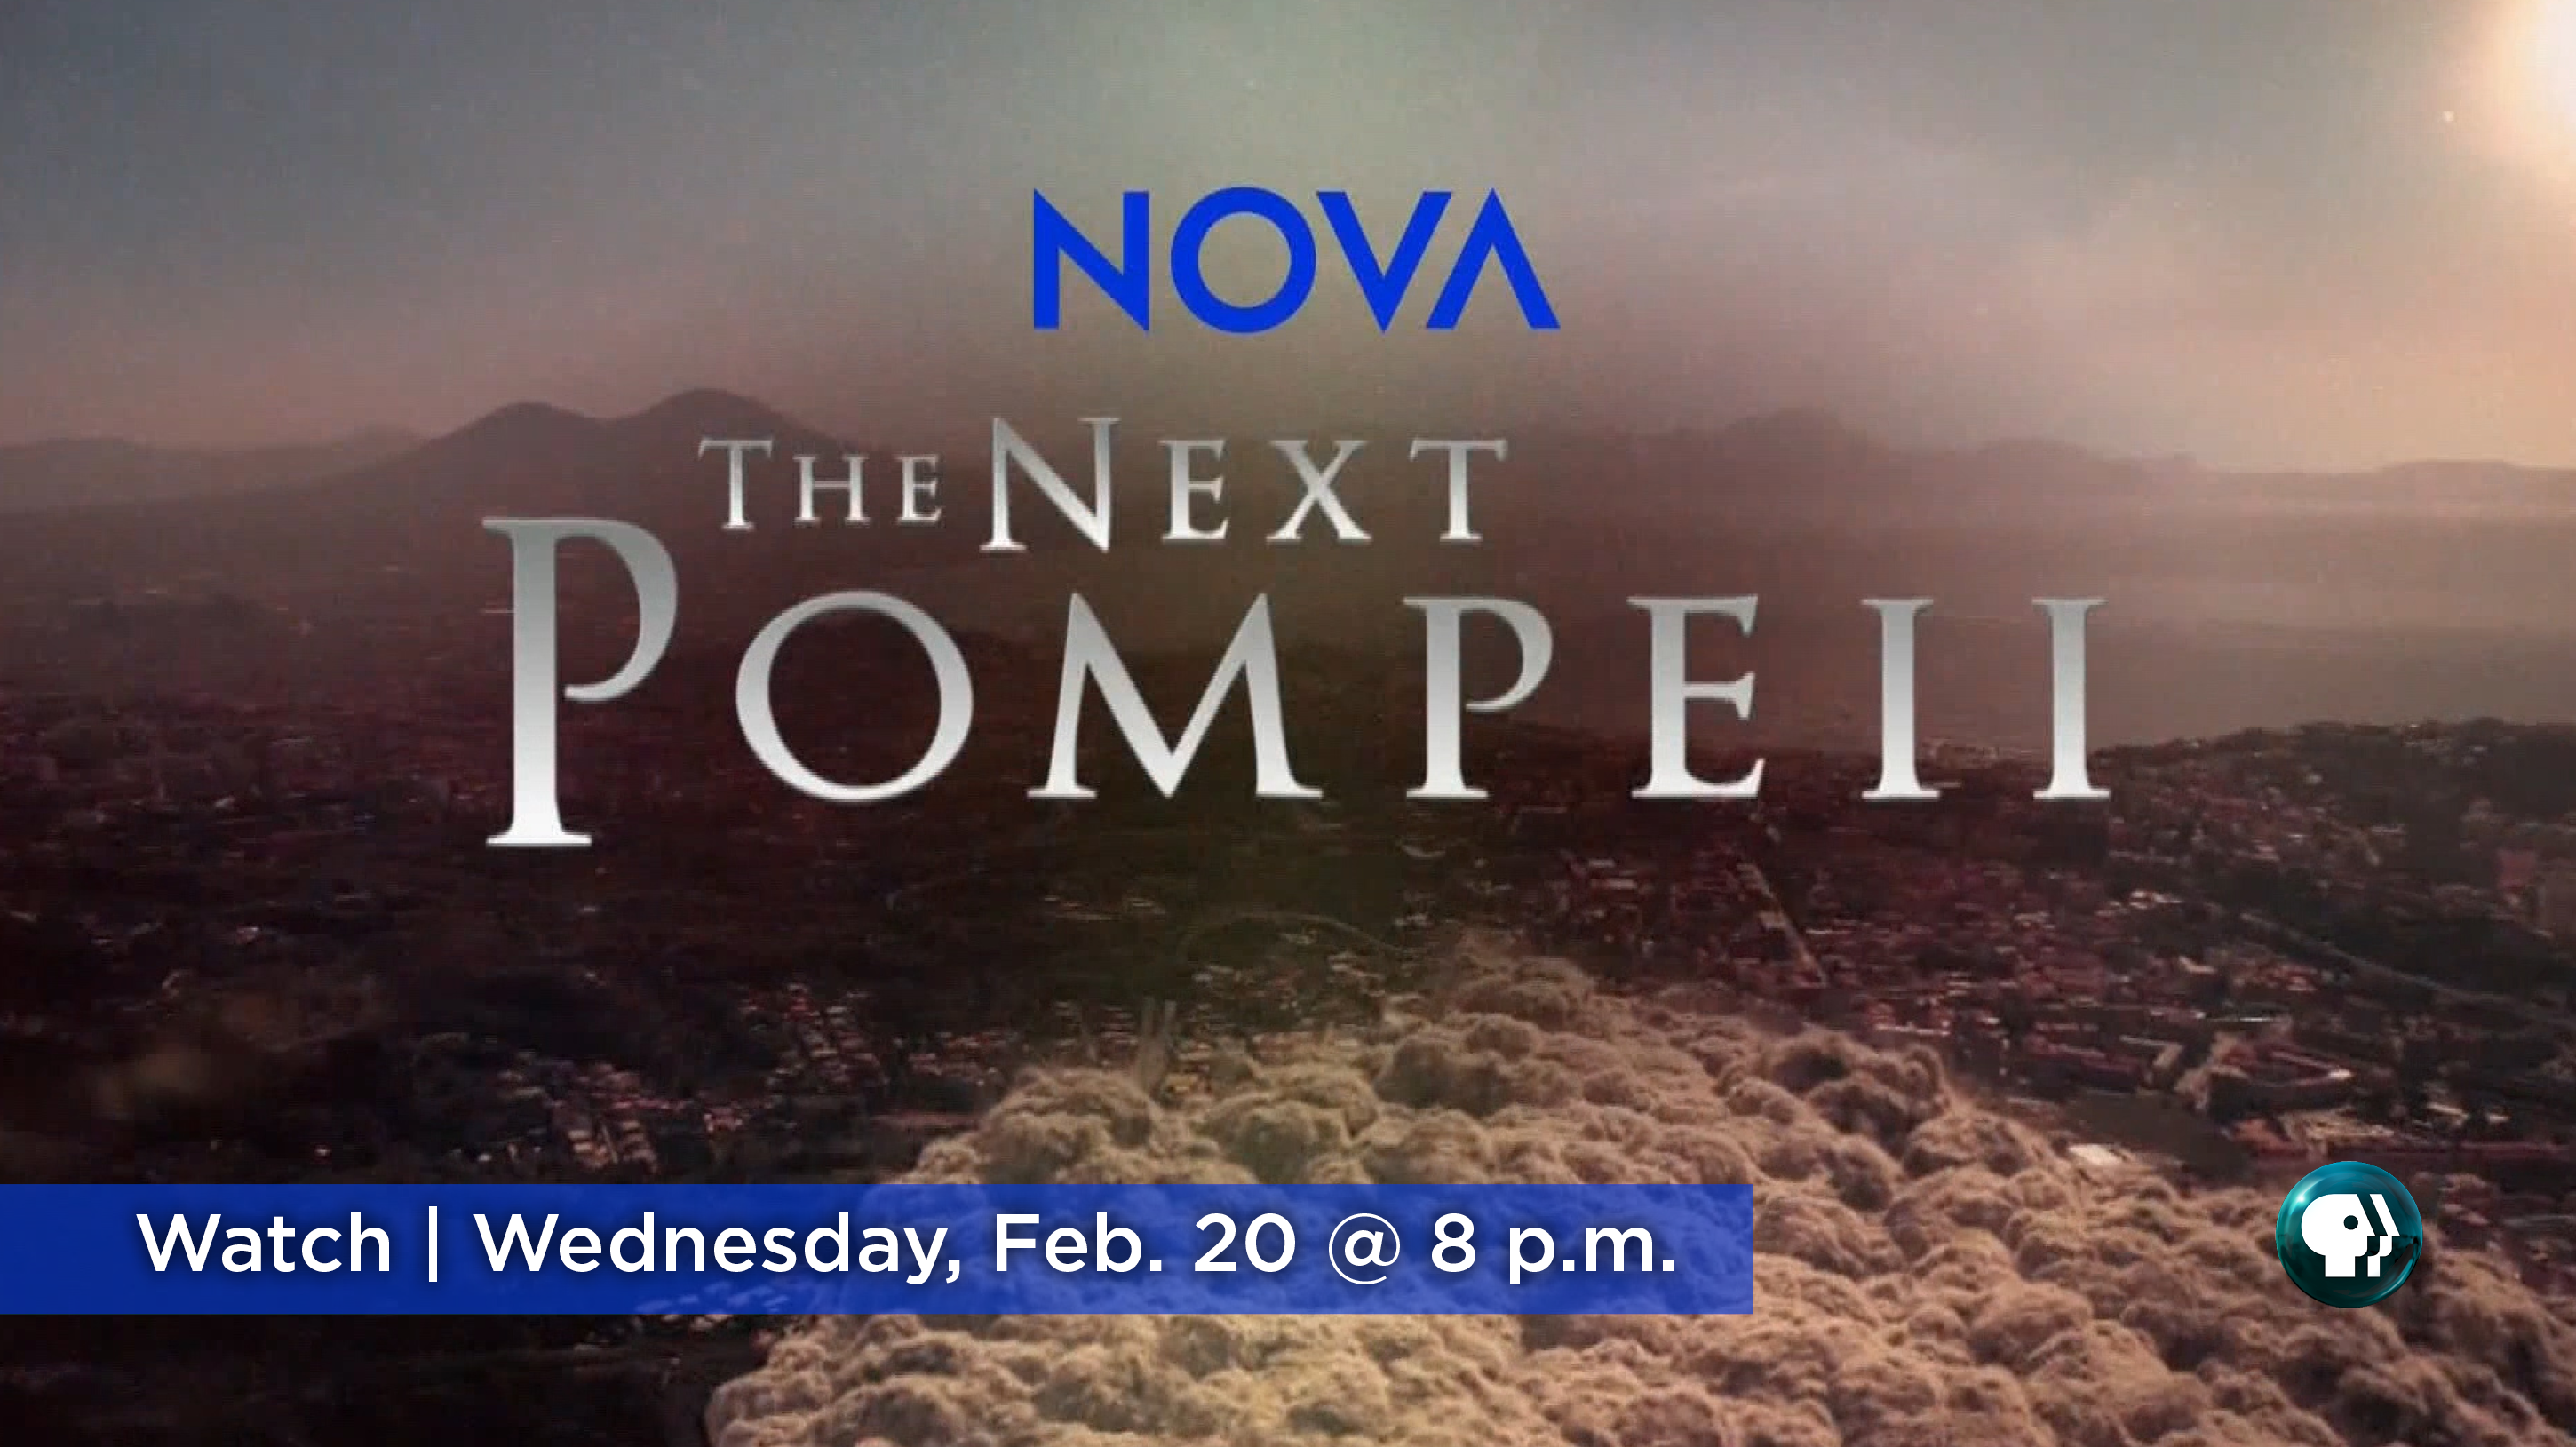 Watch The 'Pompeii' Super Bowl Spot Starring Kit Harington | Geeks of Doom